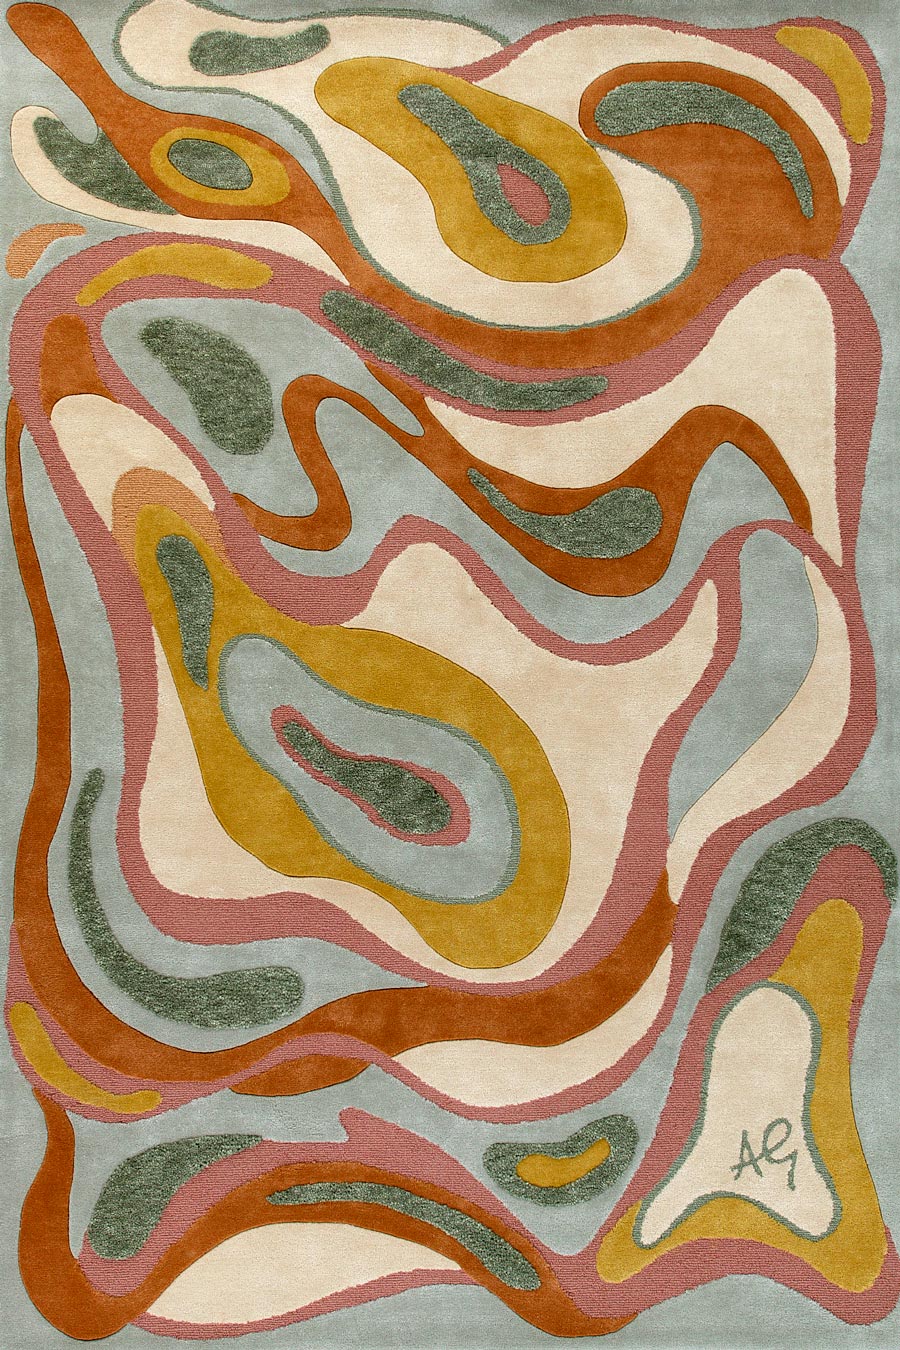 Overhead image of abstract Metamorphosis rug by Annie Georgeson